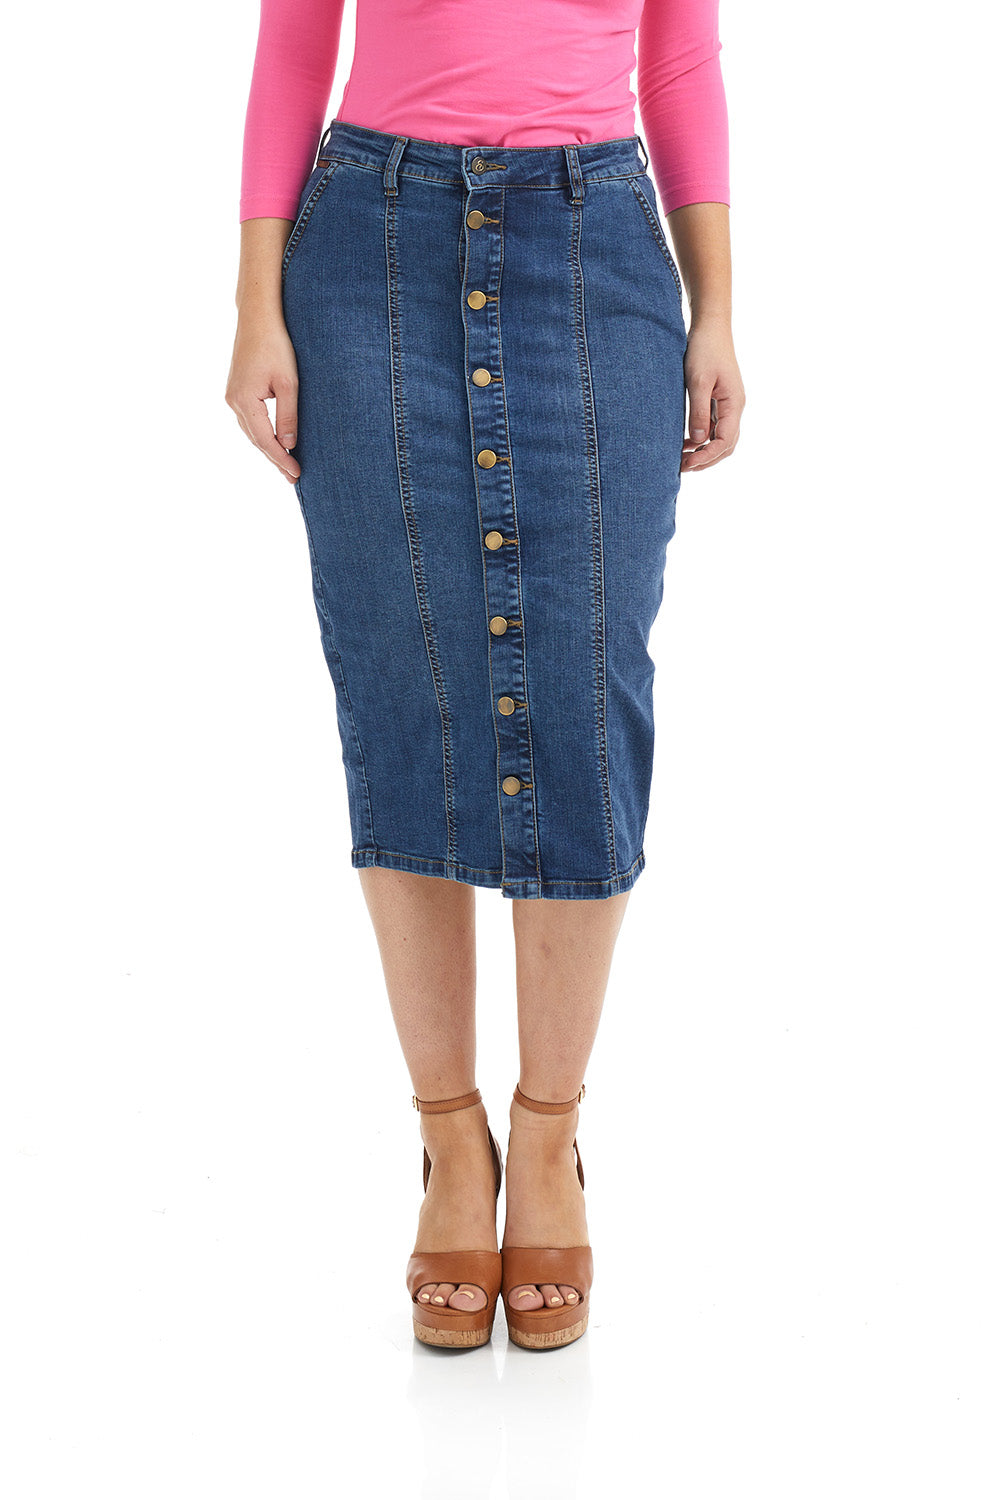 Esteez SEATTLE Midi Jean Skirt - Below Knee Length Button-down Denim Skirt for WOMEN